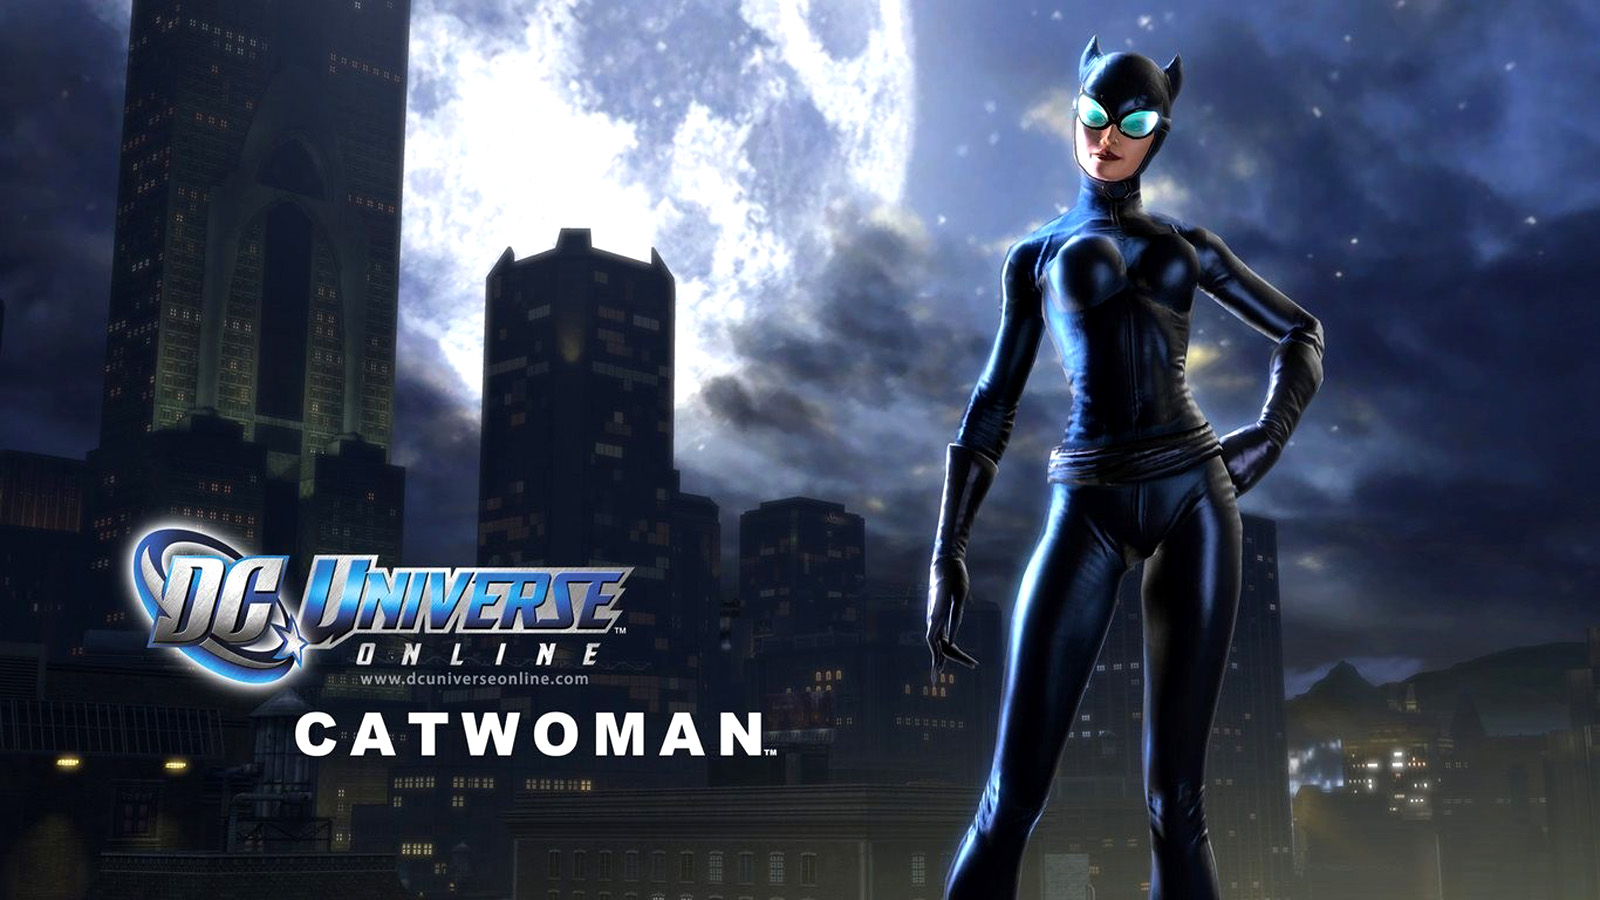 dc universe wallpaper,action adventure game,fictional character,catwoman,superhero,supervillain